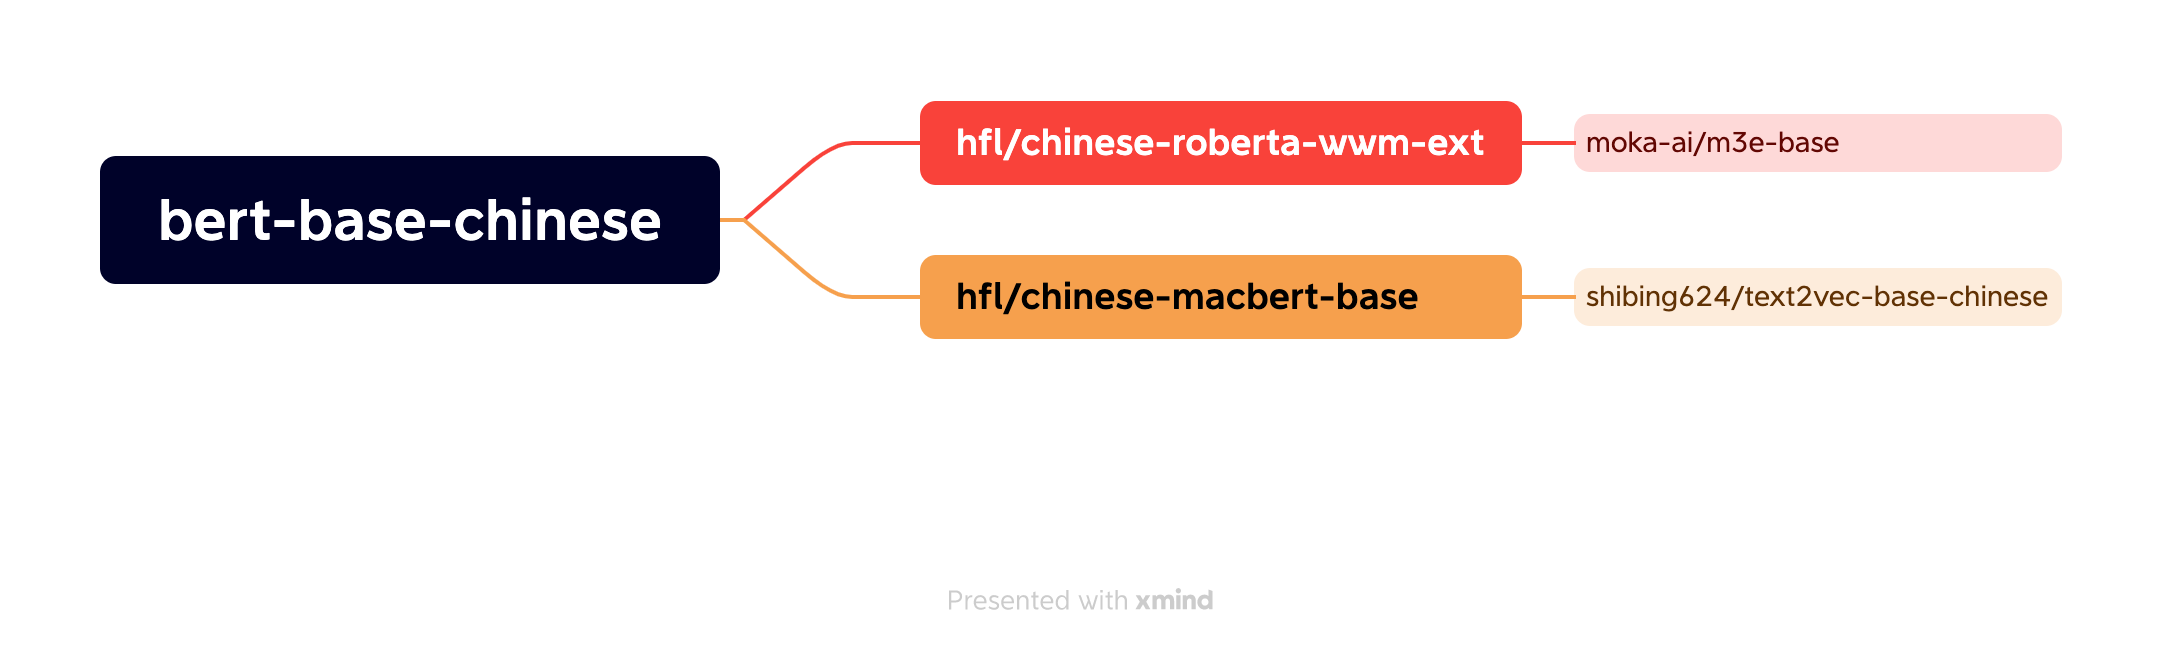 bert-base-chinese 模型及其衍生的模型继承关系